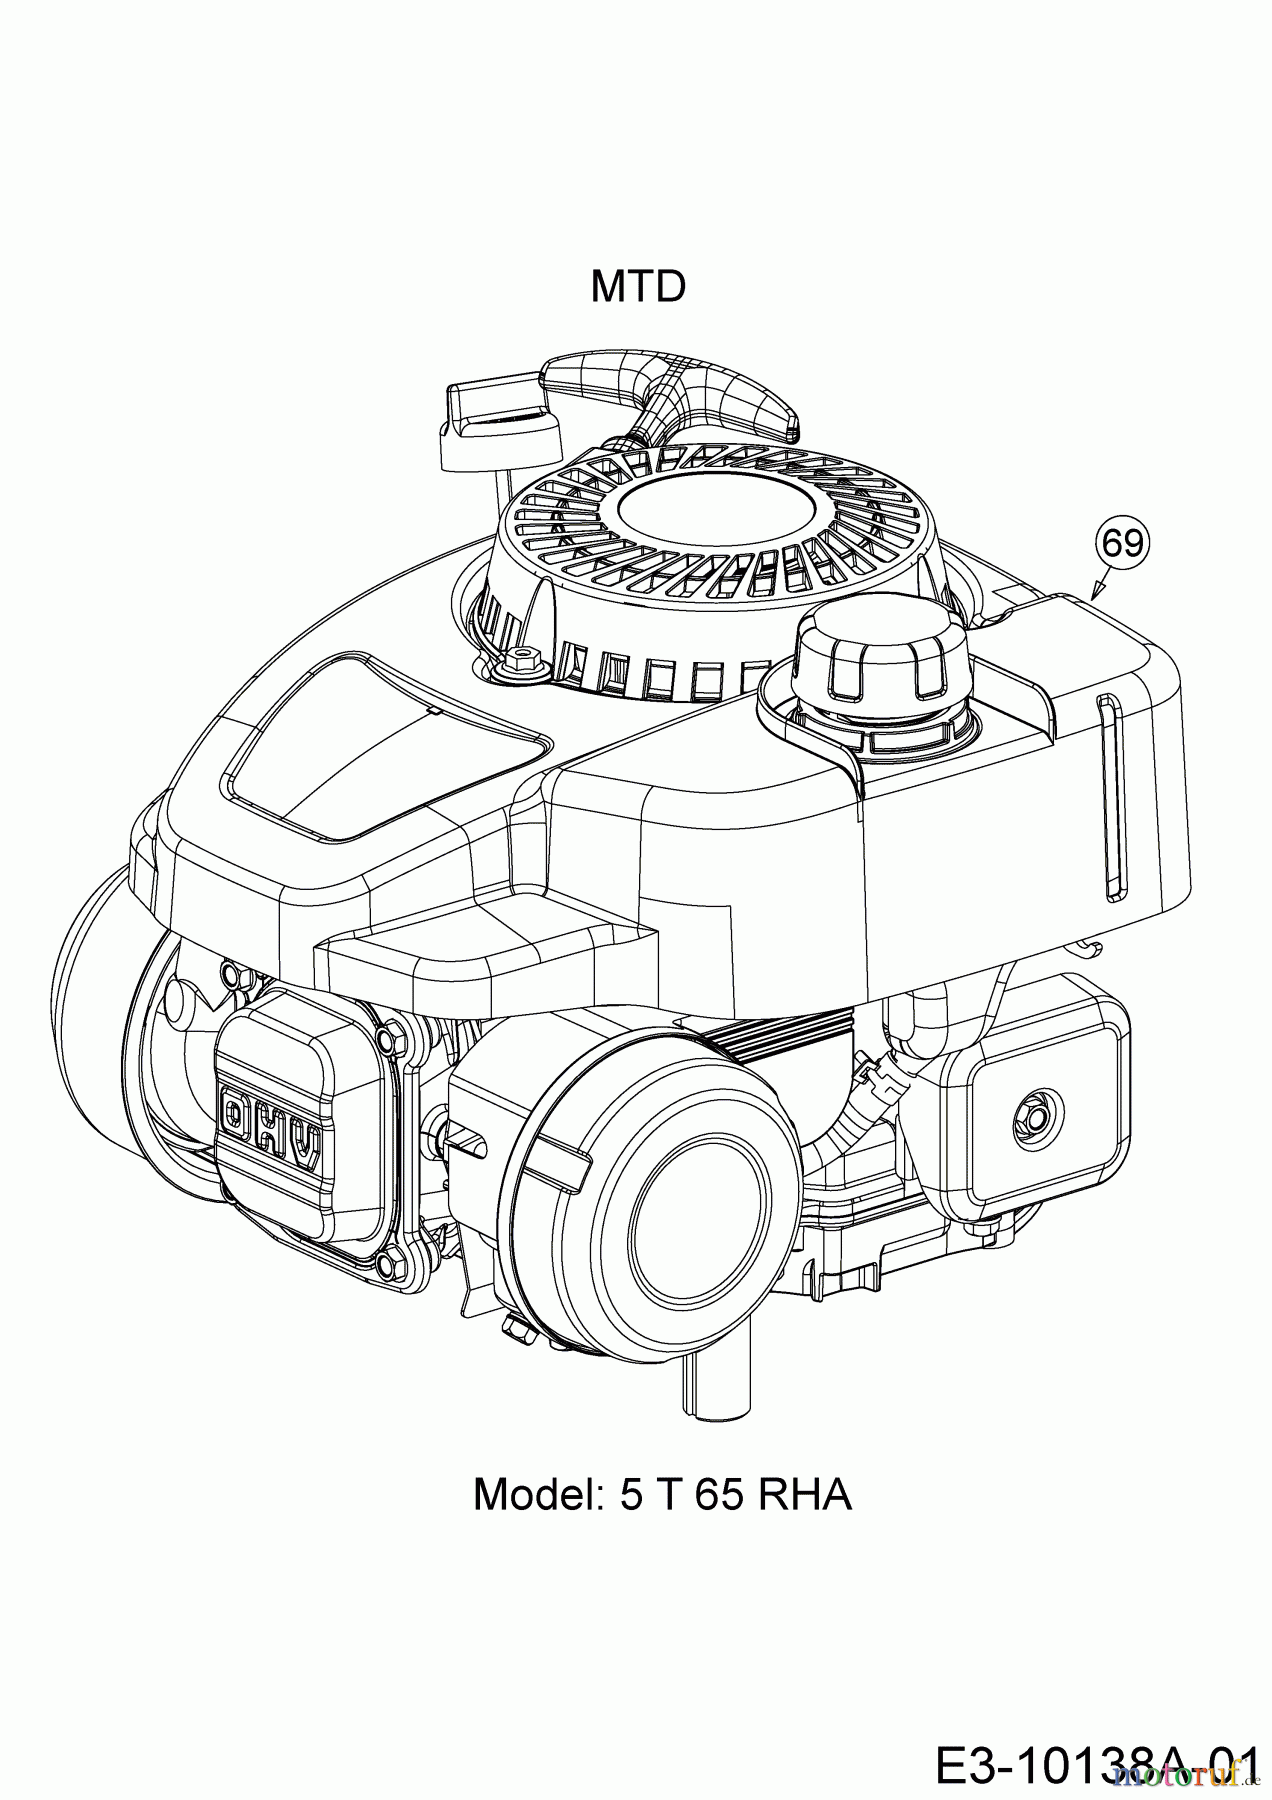  Cub Cadet Petrol mower self propelled LM1 CR53 12A-PQSC603  (2018) Engine MTD